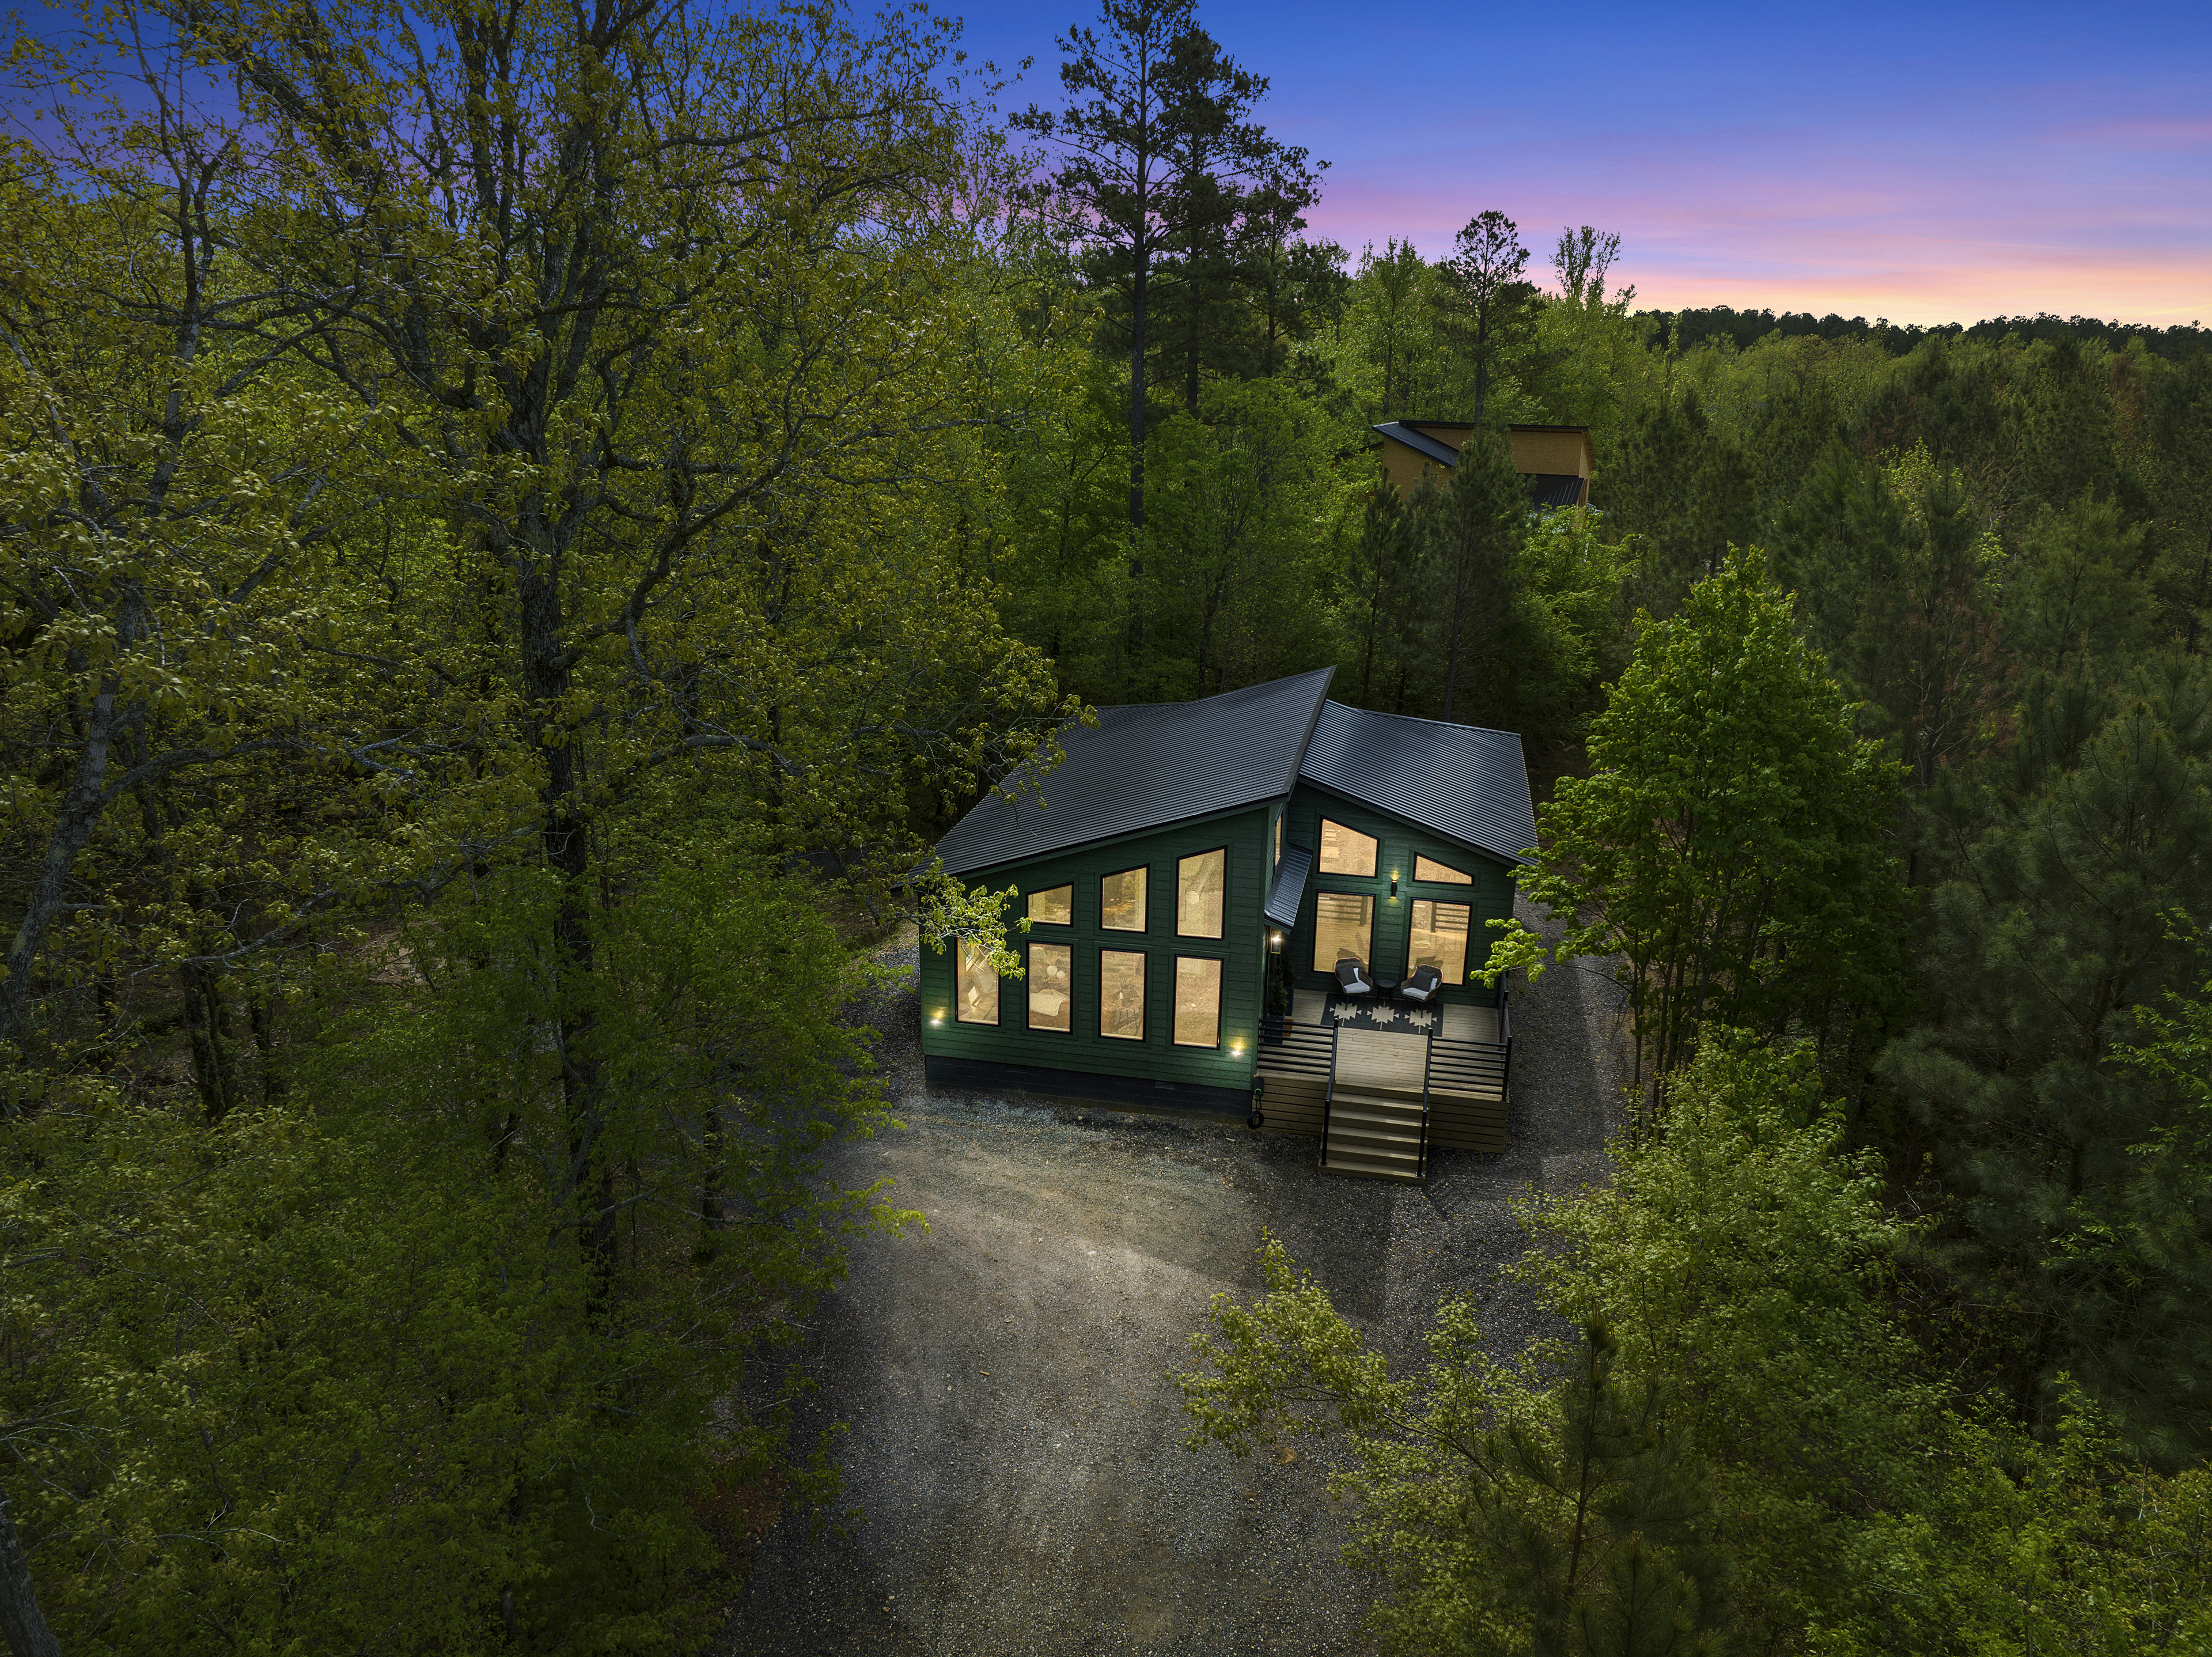 Romantic Creekside Cabin, Sleeps 2, Hot Tub - Virtual Tour Available